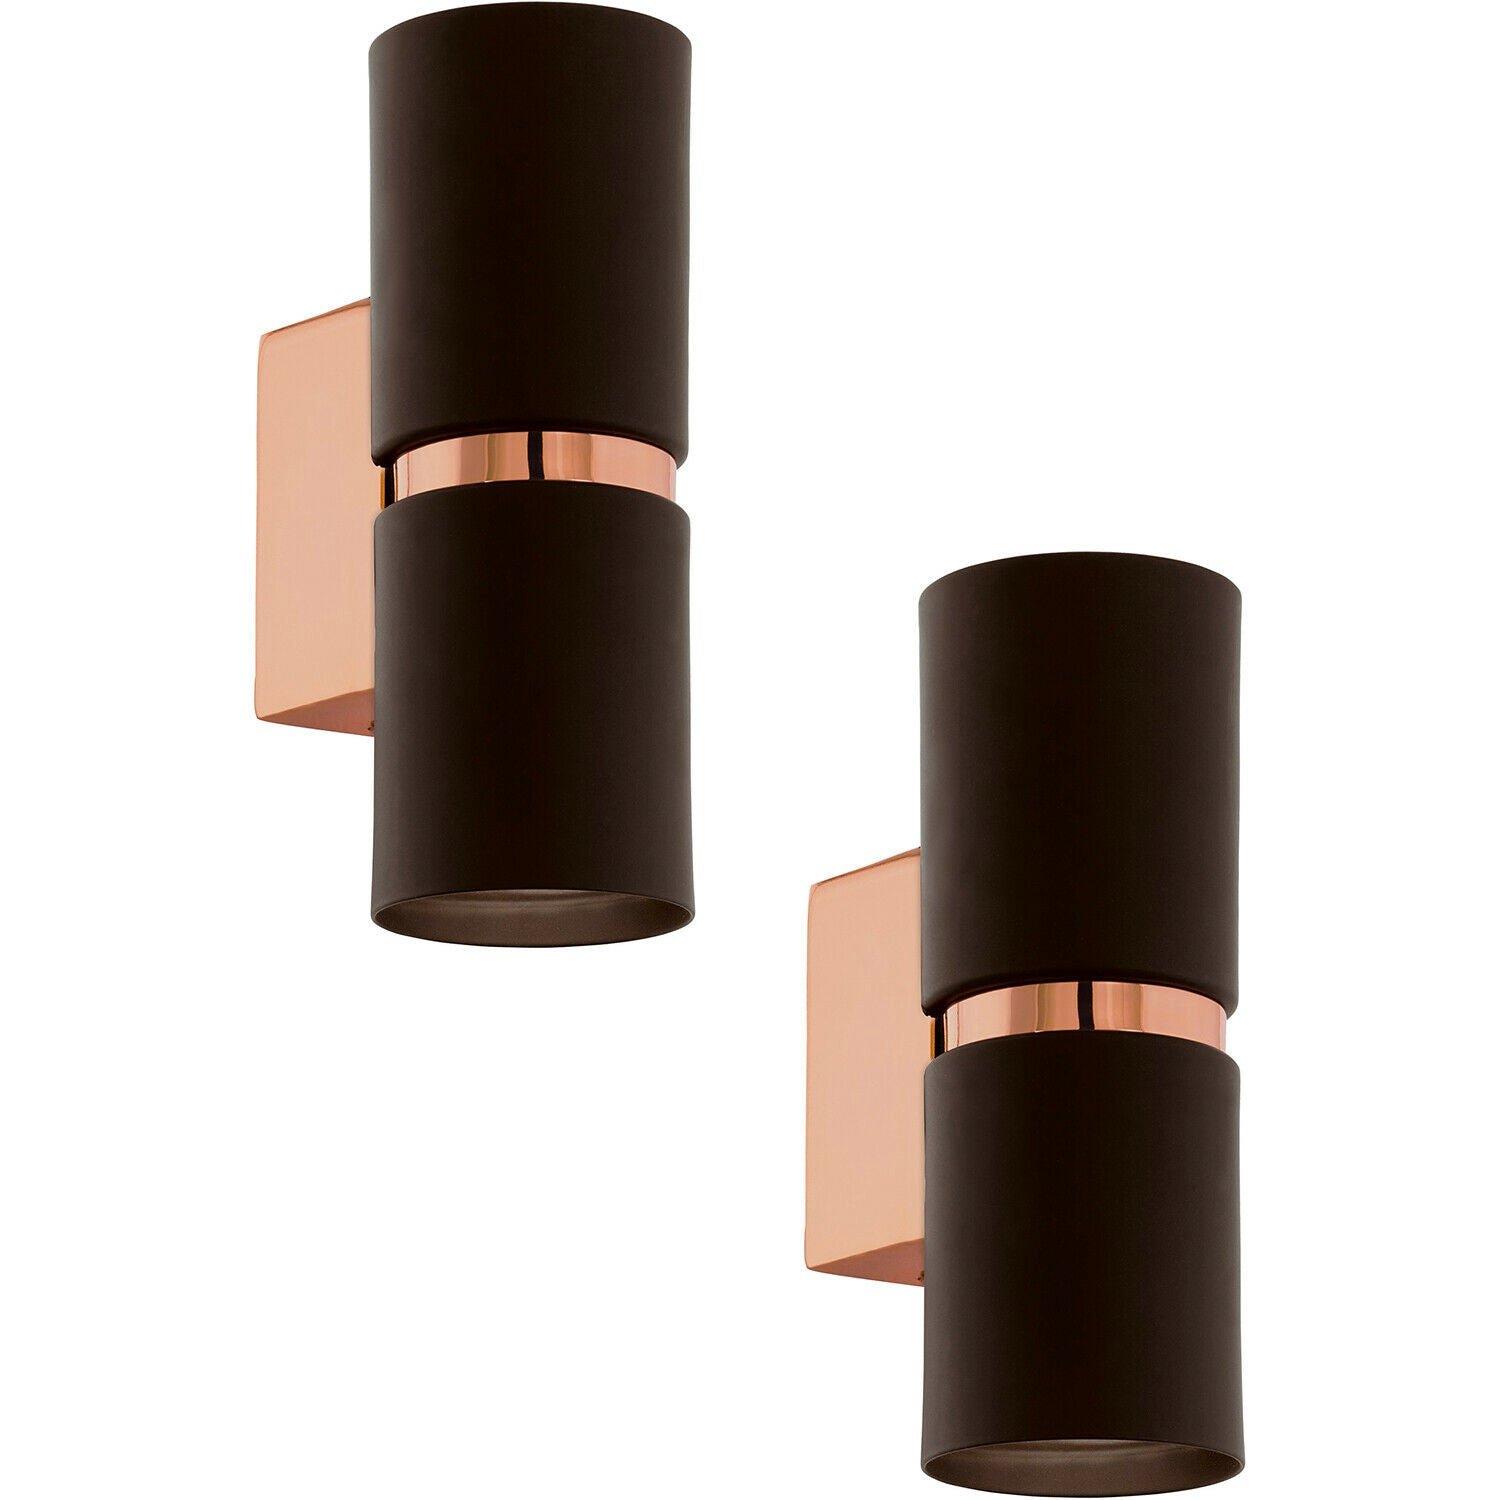 2 PACK Wall Light Colour Copper Coloured Steel Brown Round Shade GU10 2x3.3W